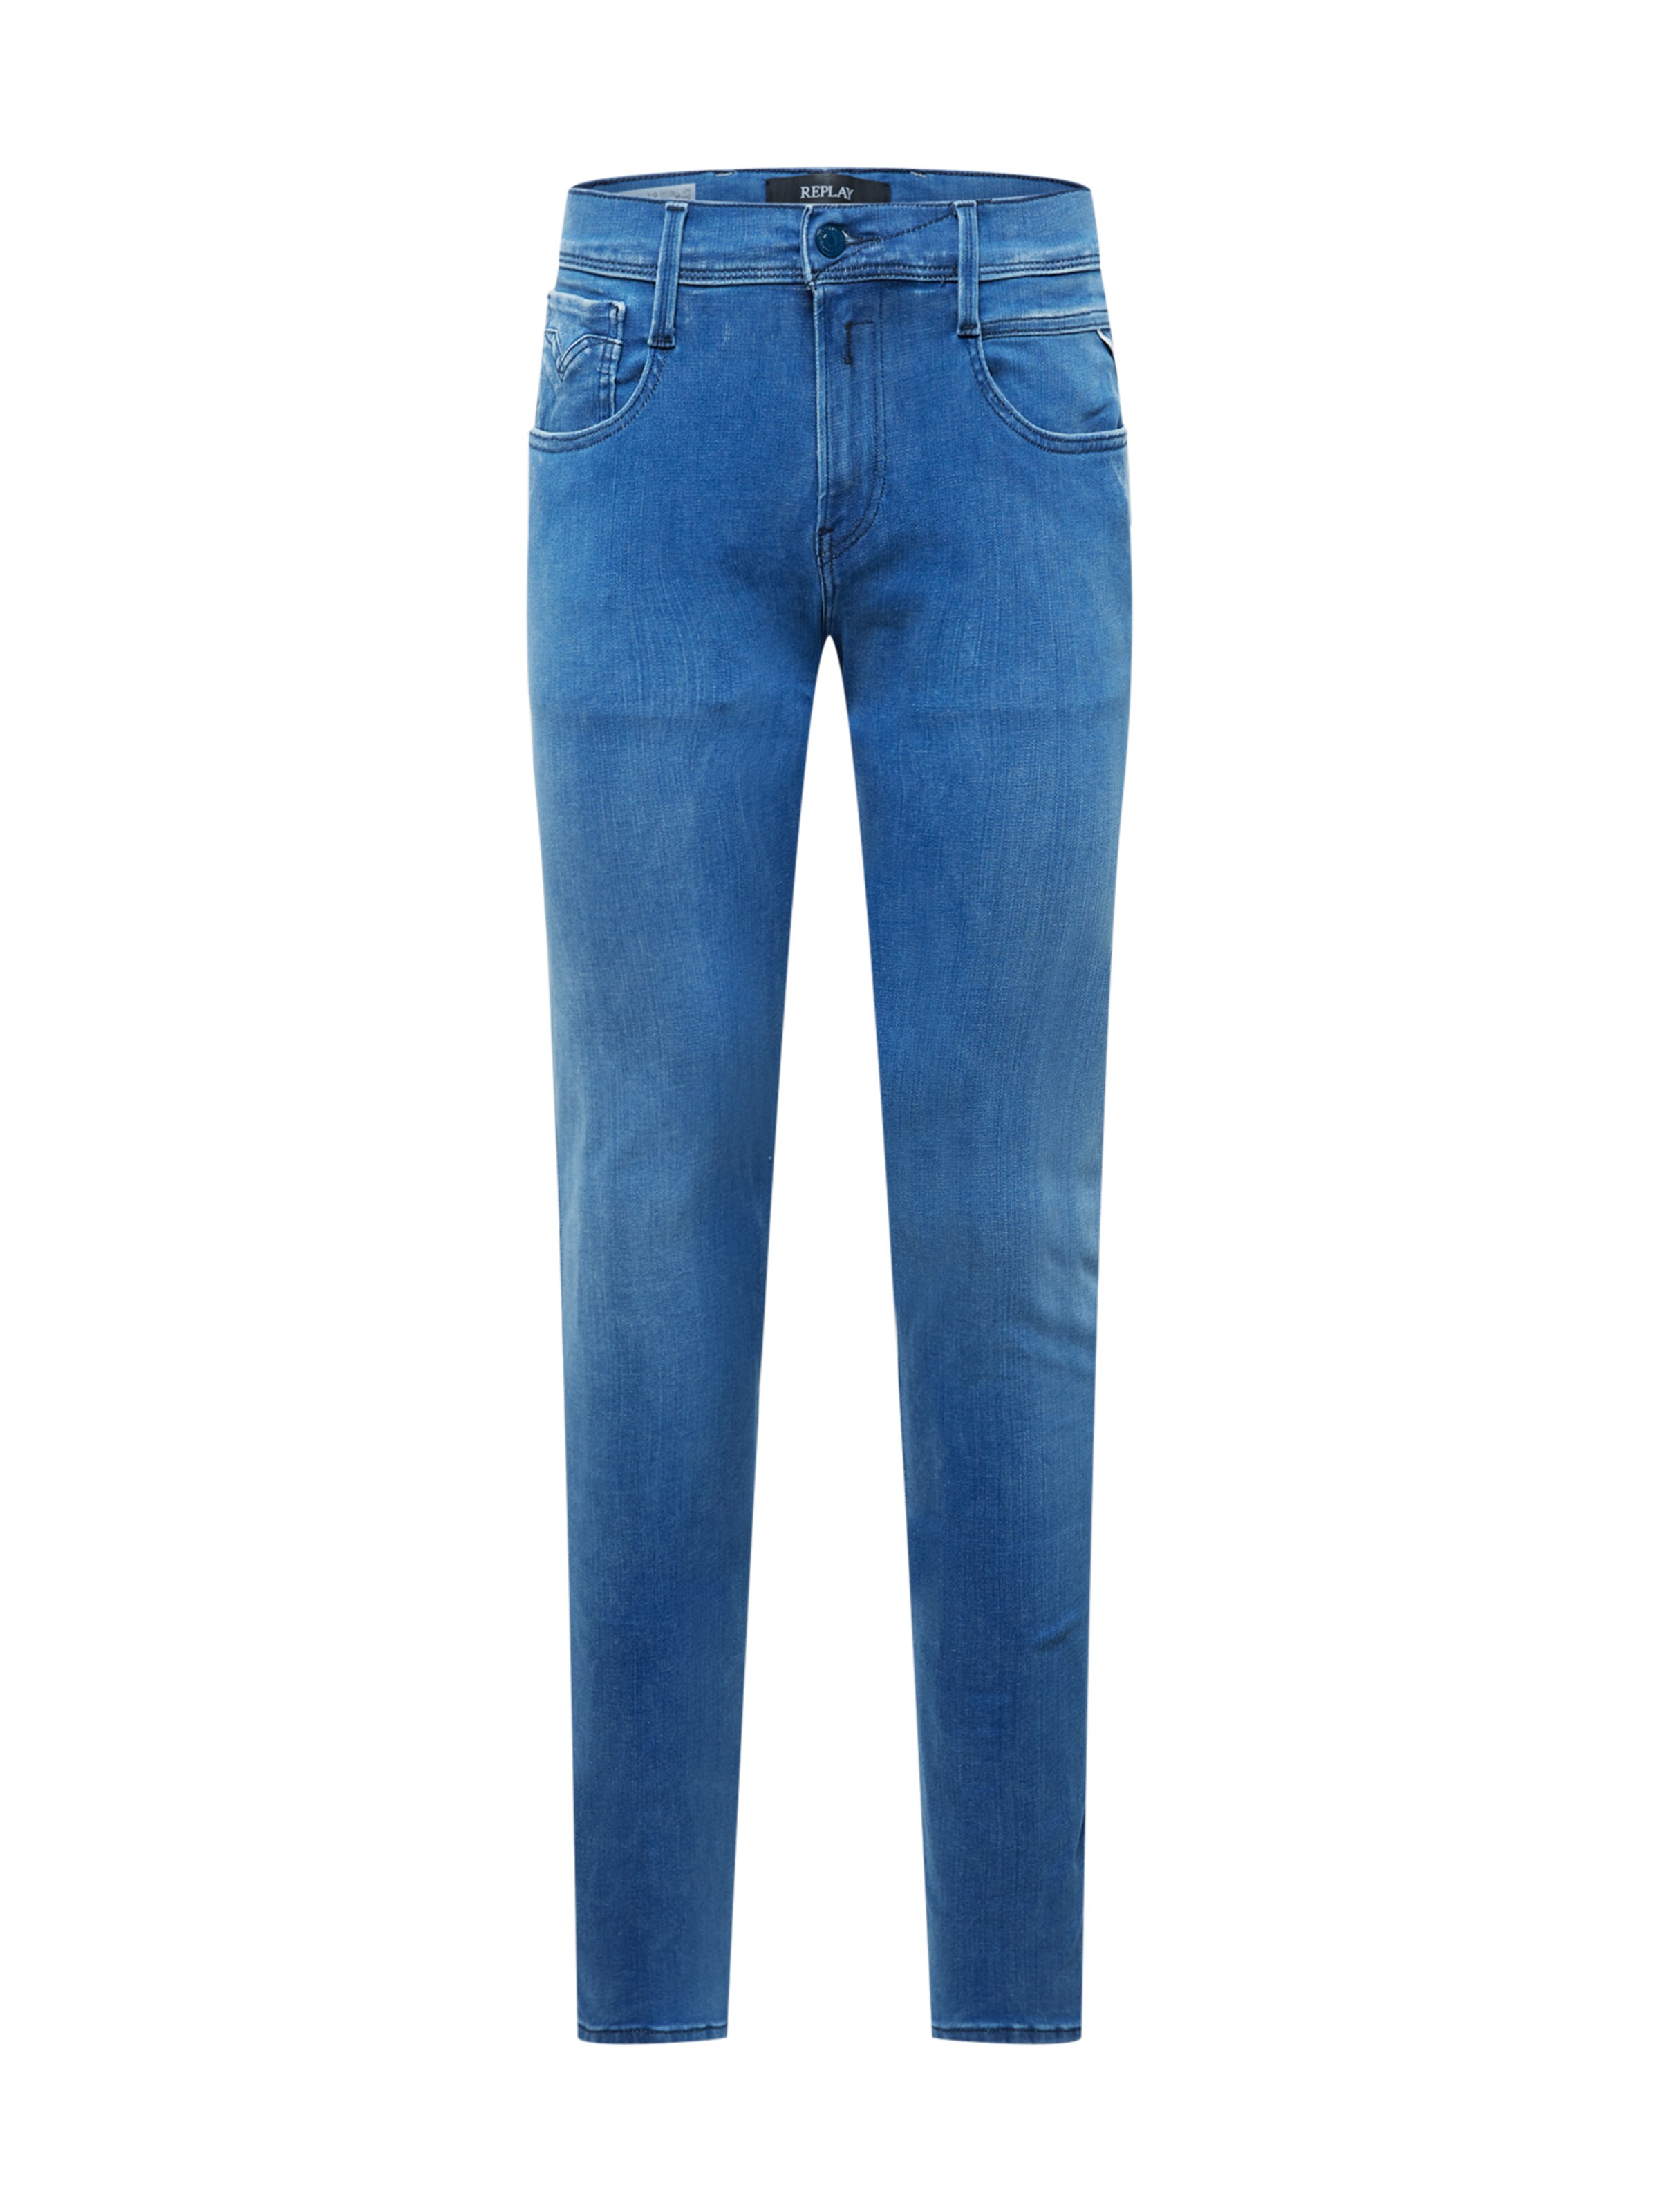 Jeans SPIKE ABOUT YOU Uomo Abbigliamento Pantaloni e jeans Jeans Jeans slim & sigaretta 